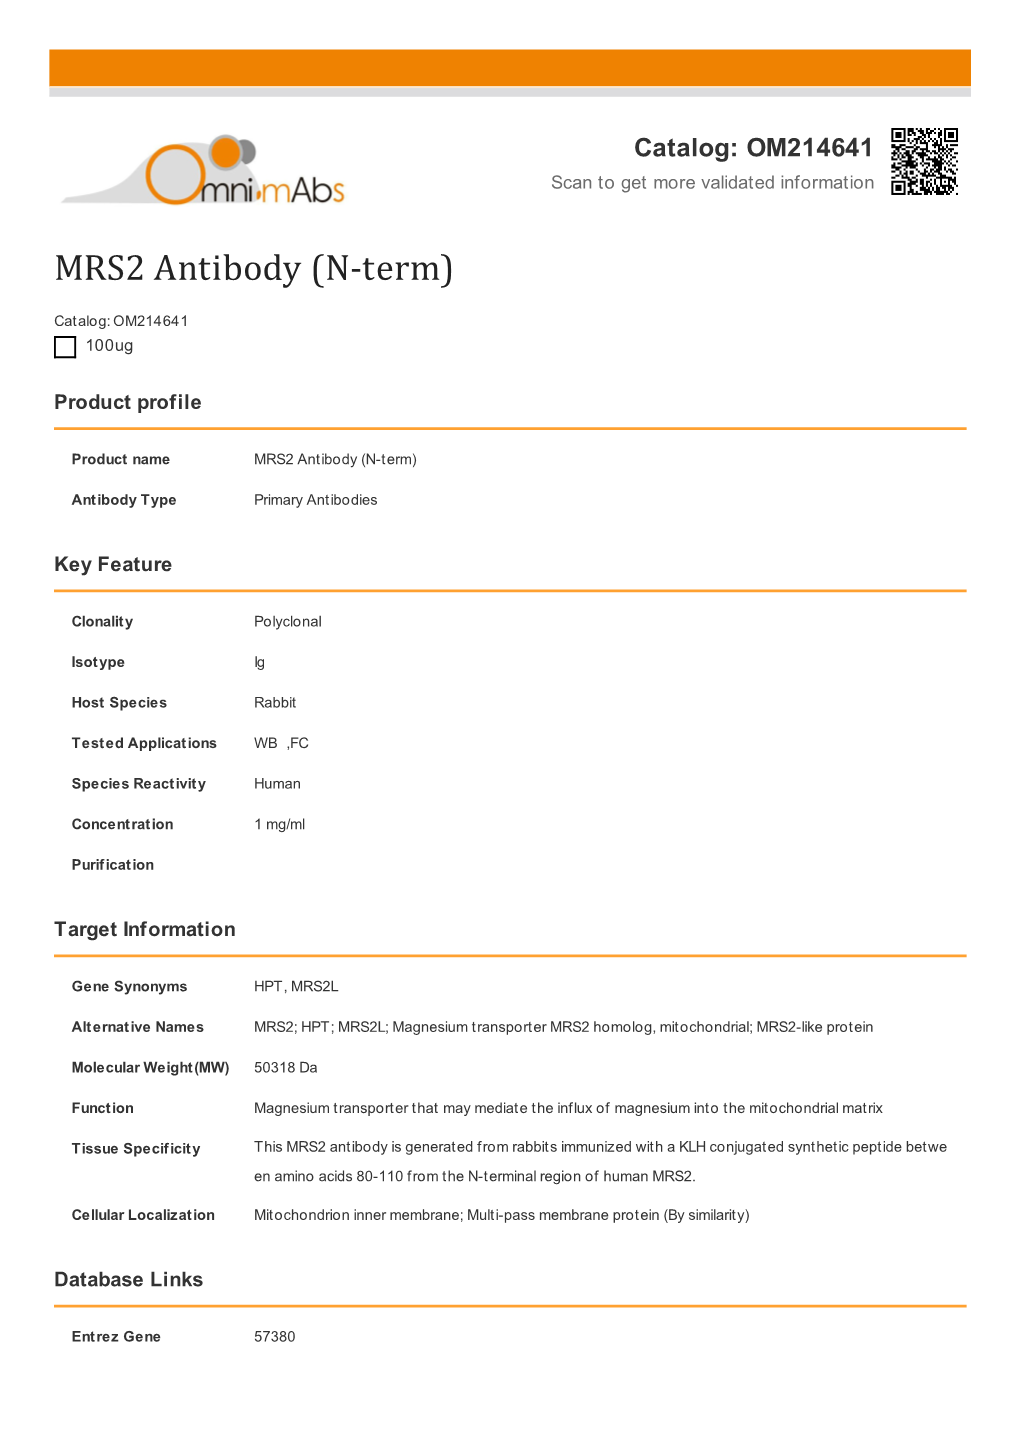 MRS2 Antibody (N-Term)